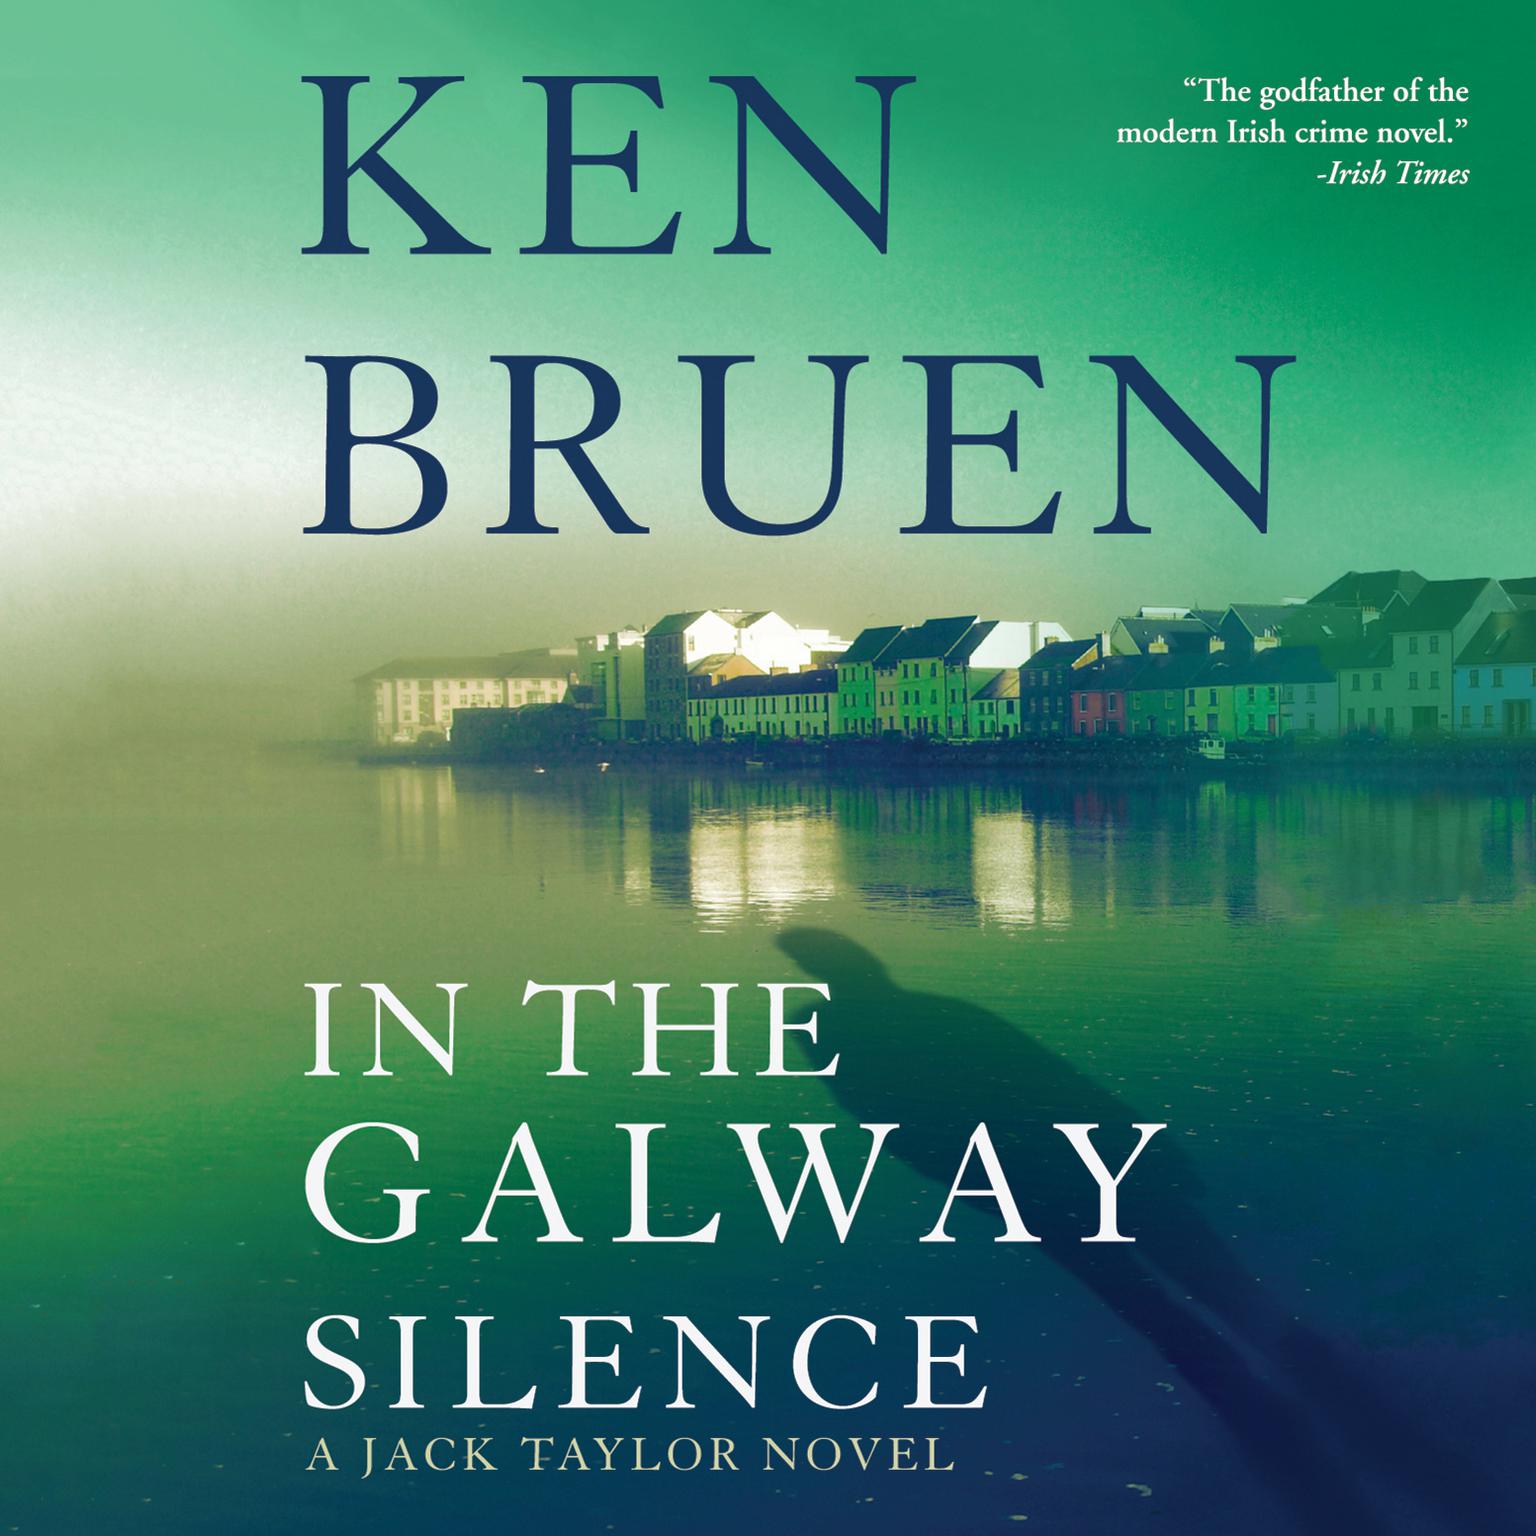 In the Galway Silence Audiobook, by Ken Bruen